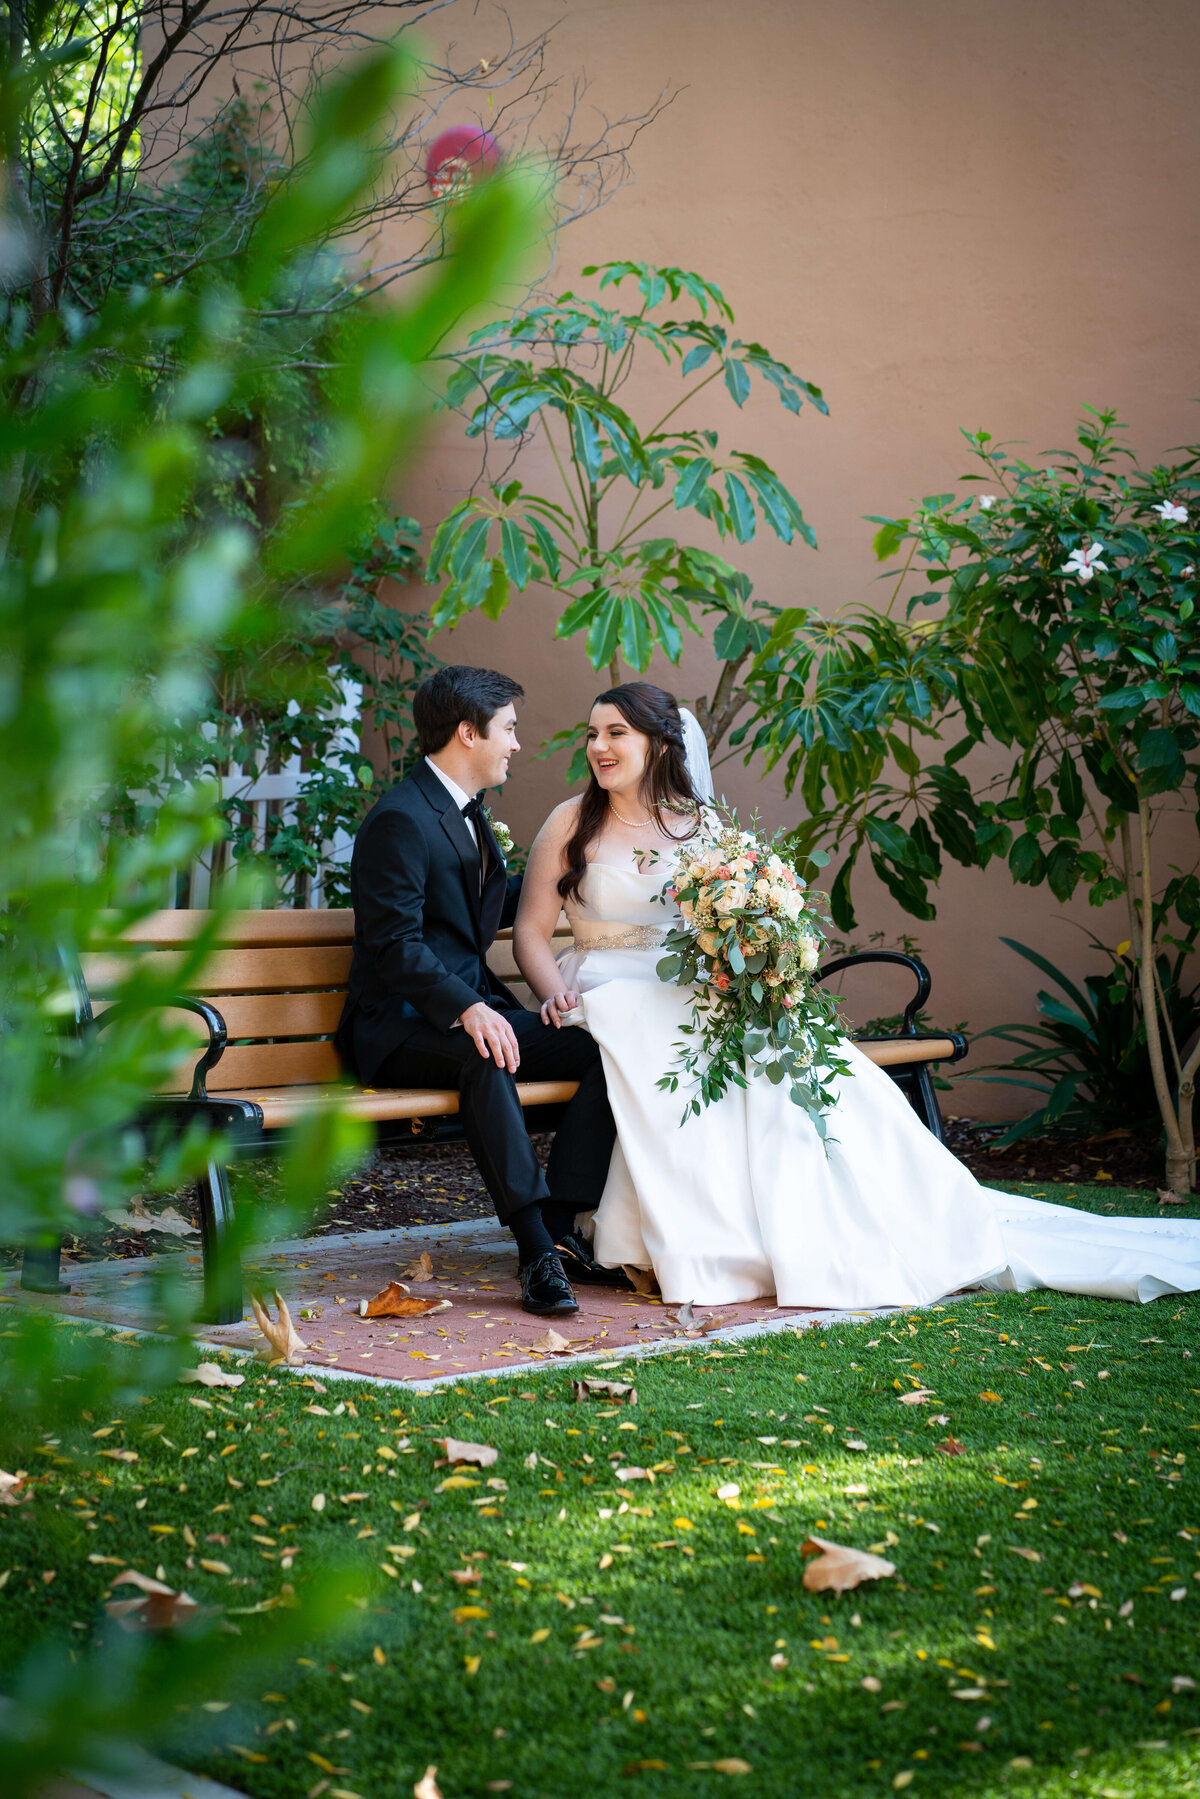 KS-Gray-Photography-newport-beach-wedding-photographer-bride-and-groom-sitting-on-bench